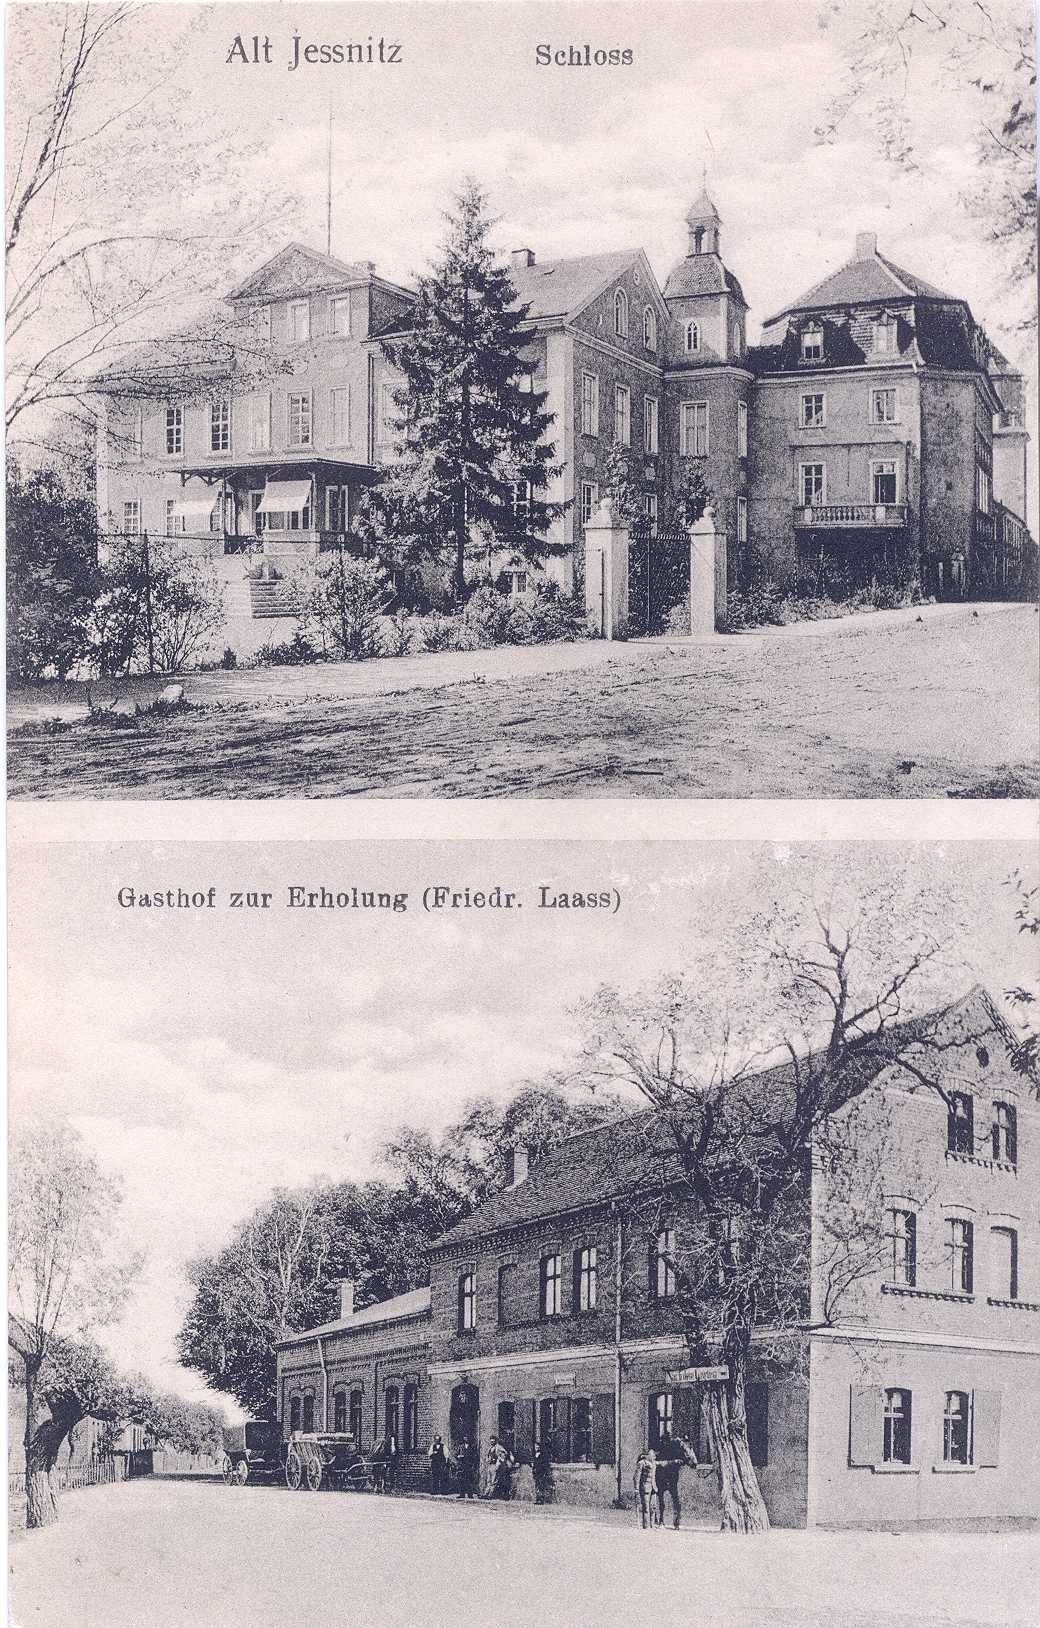 Ansichtskarte Altjeßnitz (Kreismuseum Bitterfeld CC BY-NC-SA)